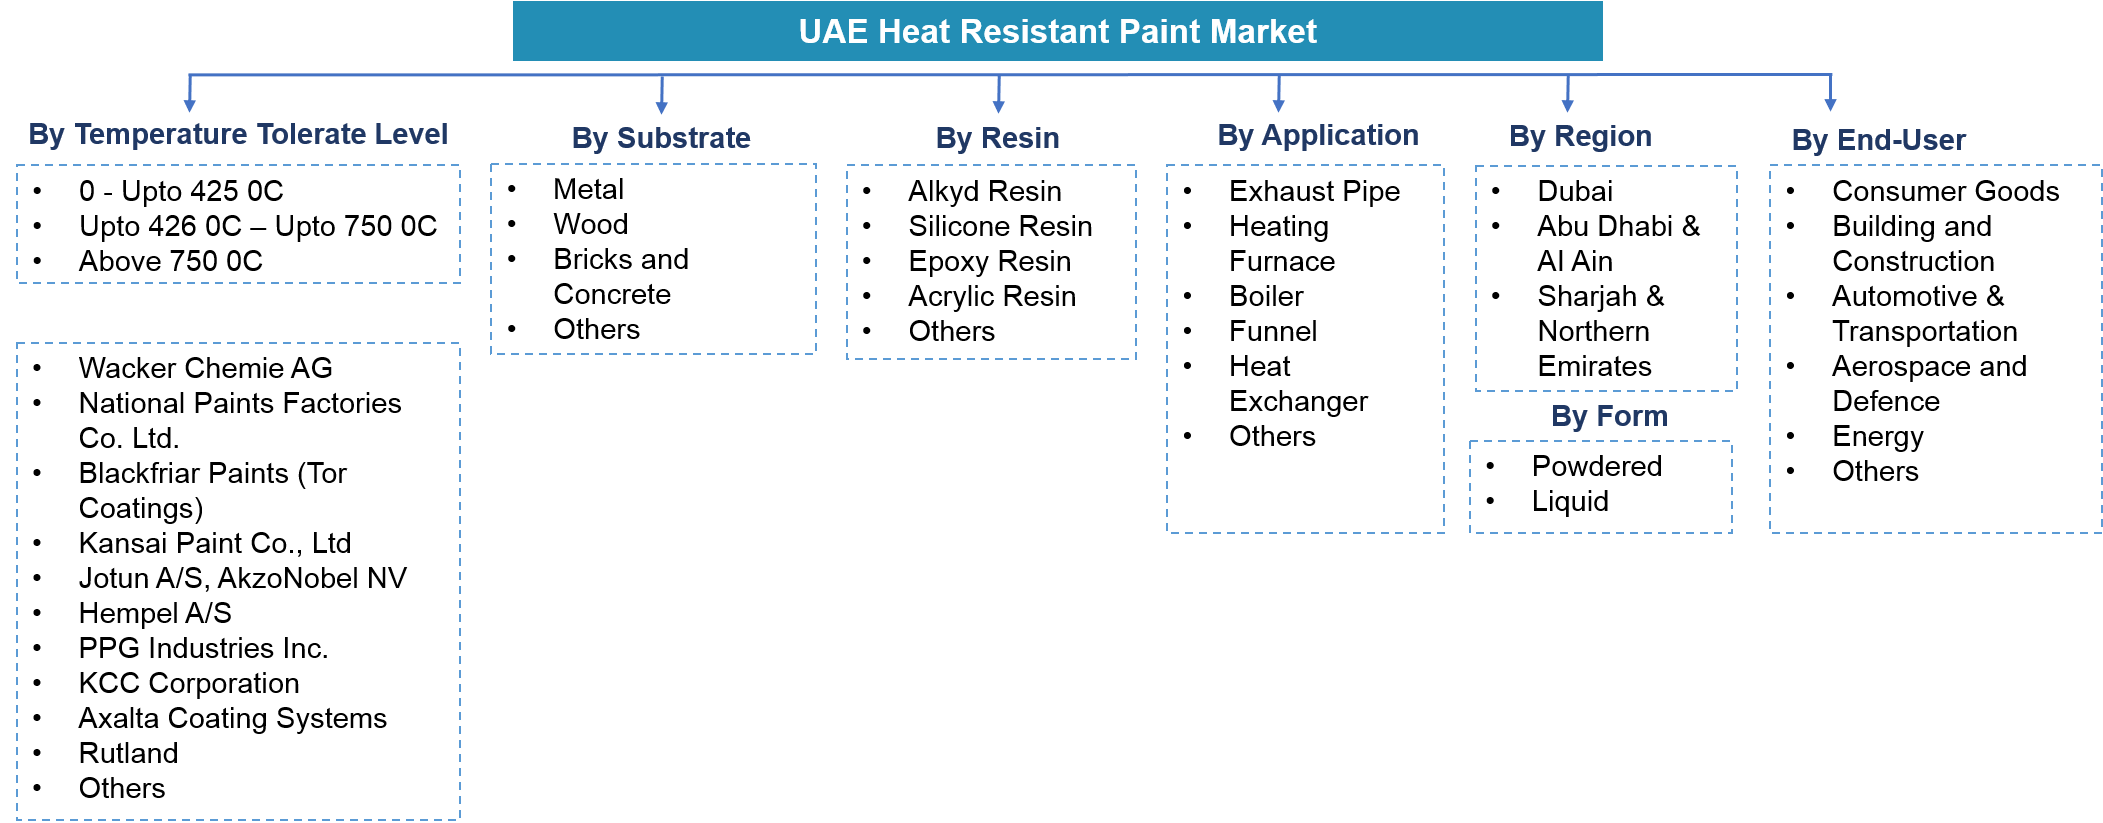 UAE Heat Resistant Paint Market Segmentation